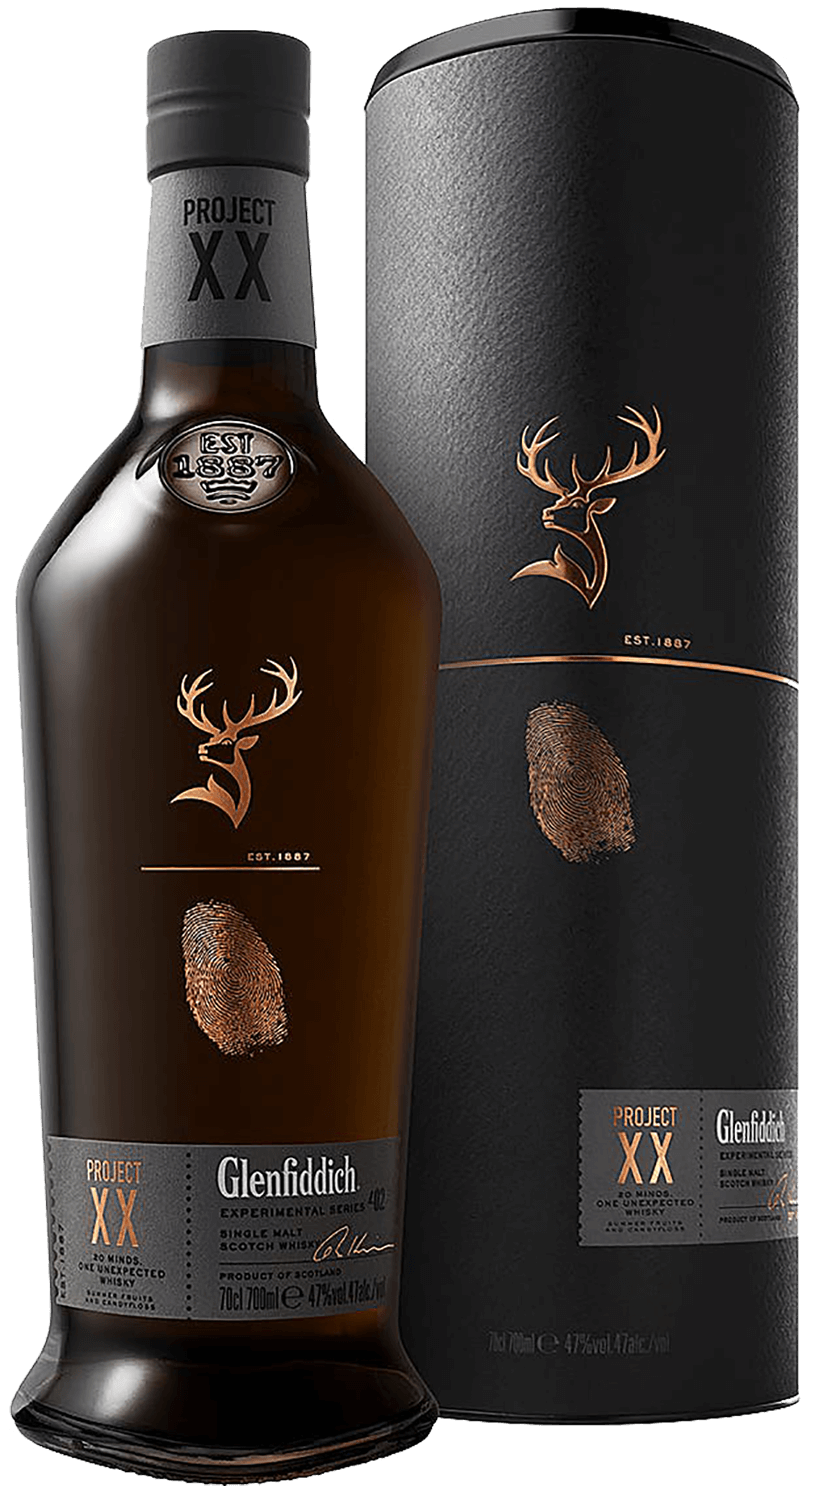 Glenfiddich Project ХХ Single Malt Scotch Whisky (gift box)